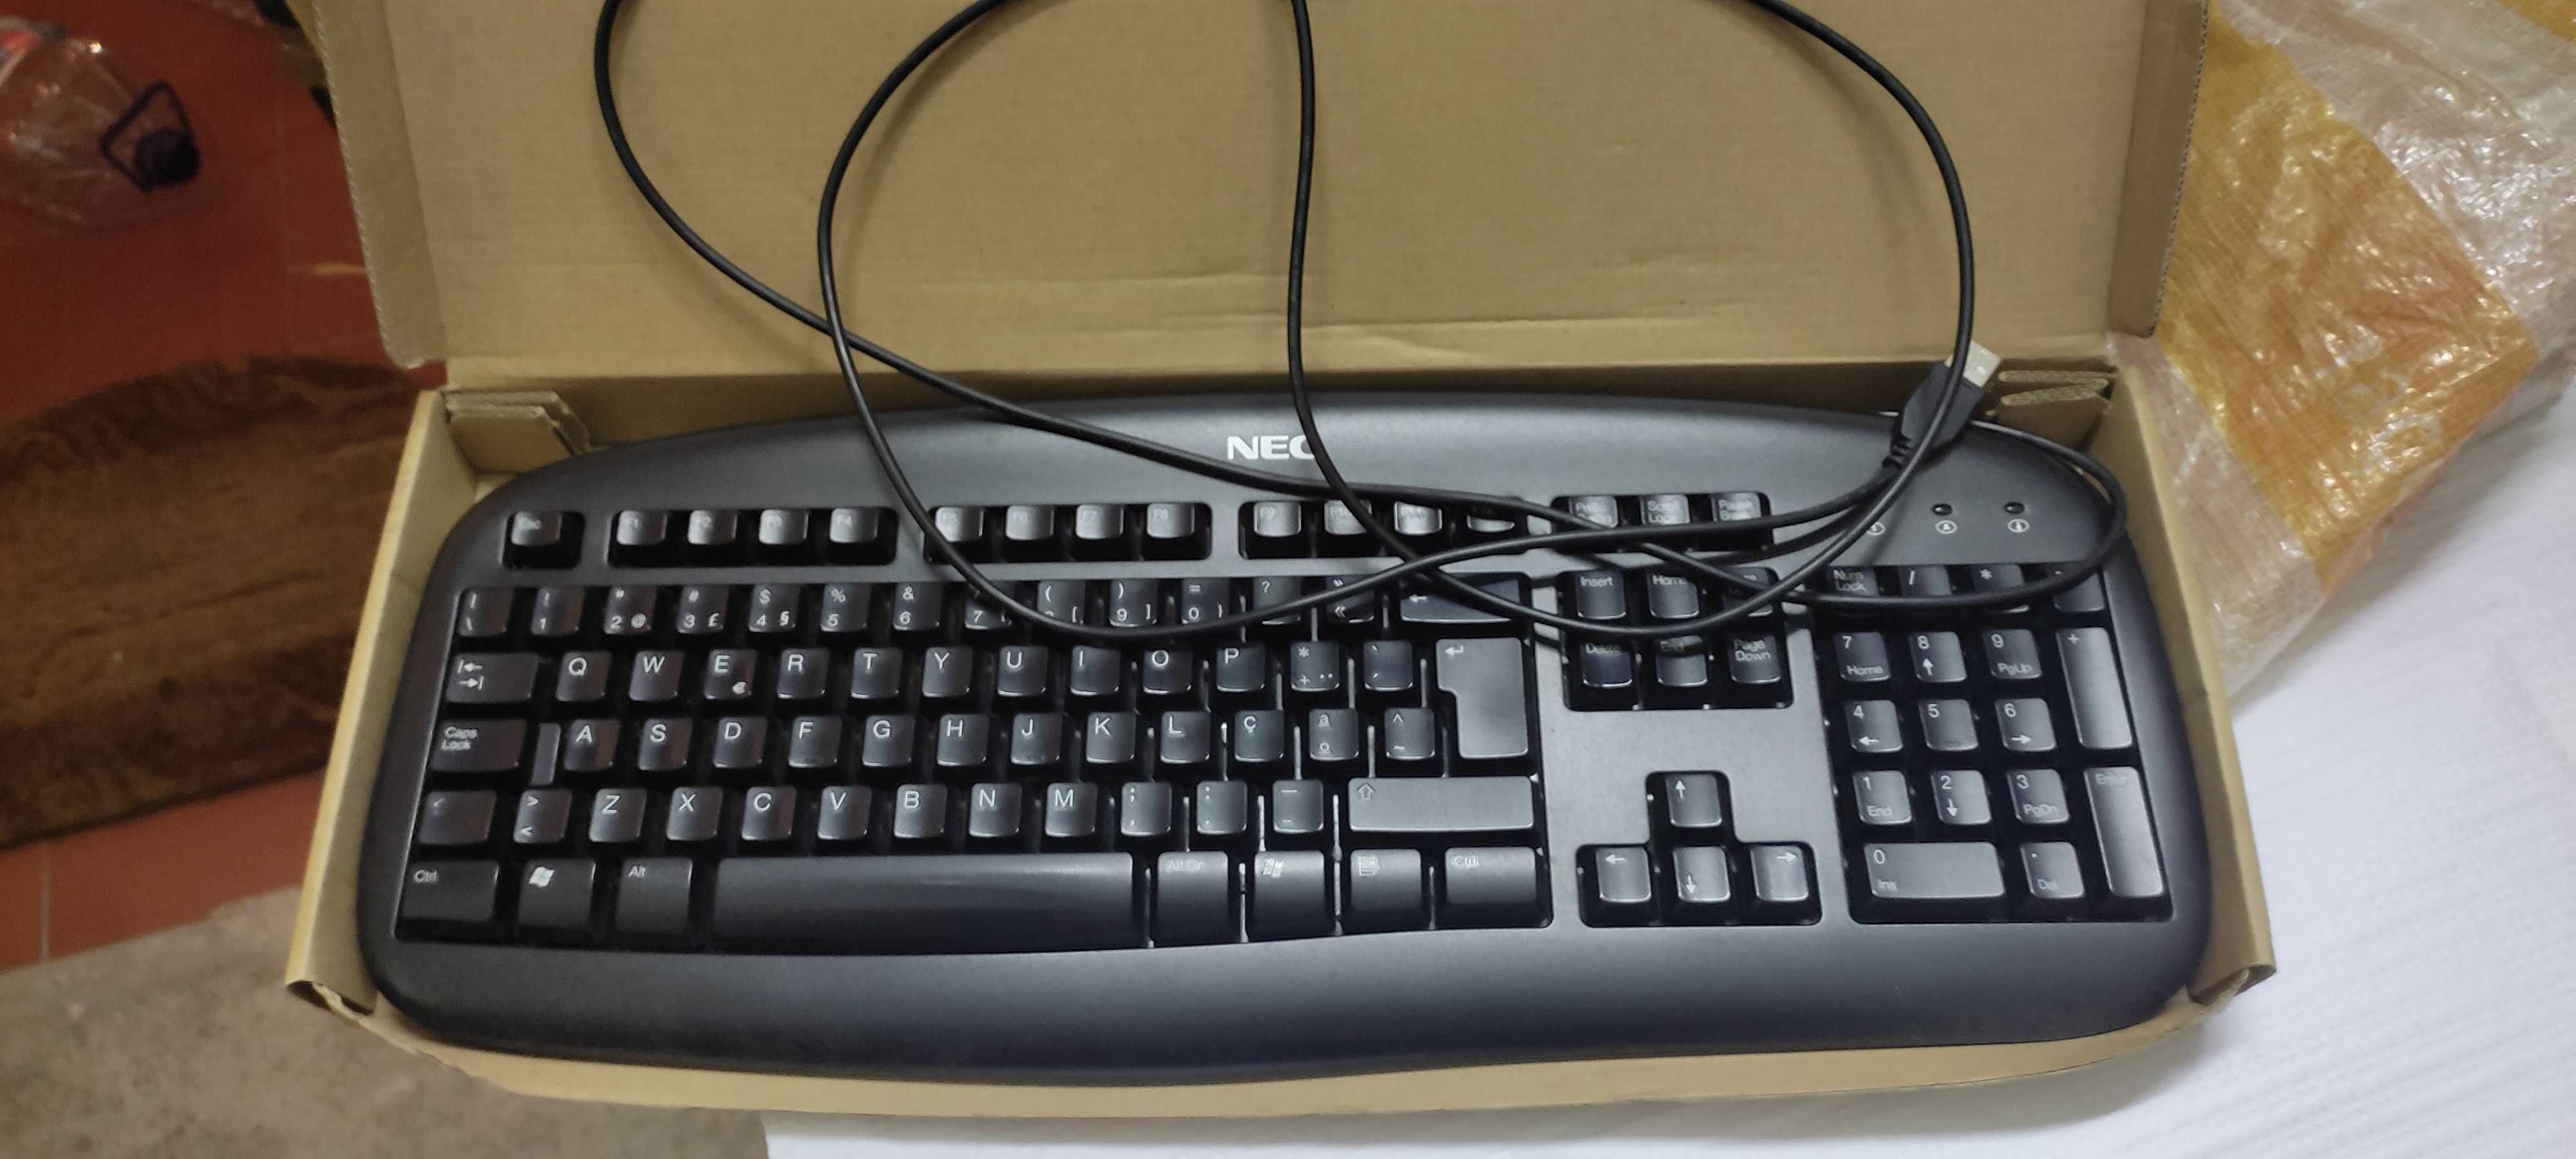 Monitor 17'' e teclado deluxe